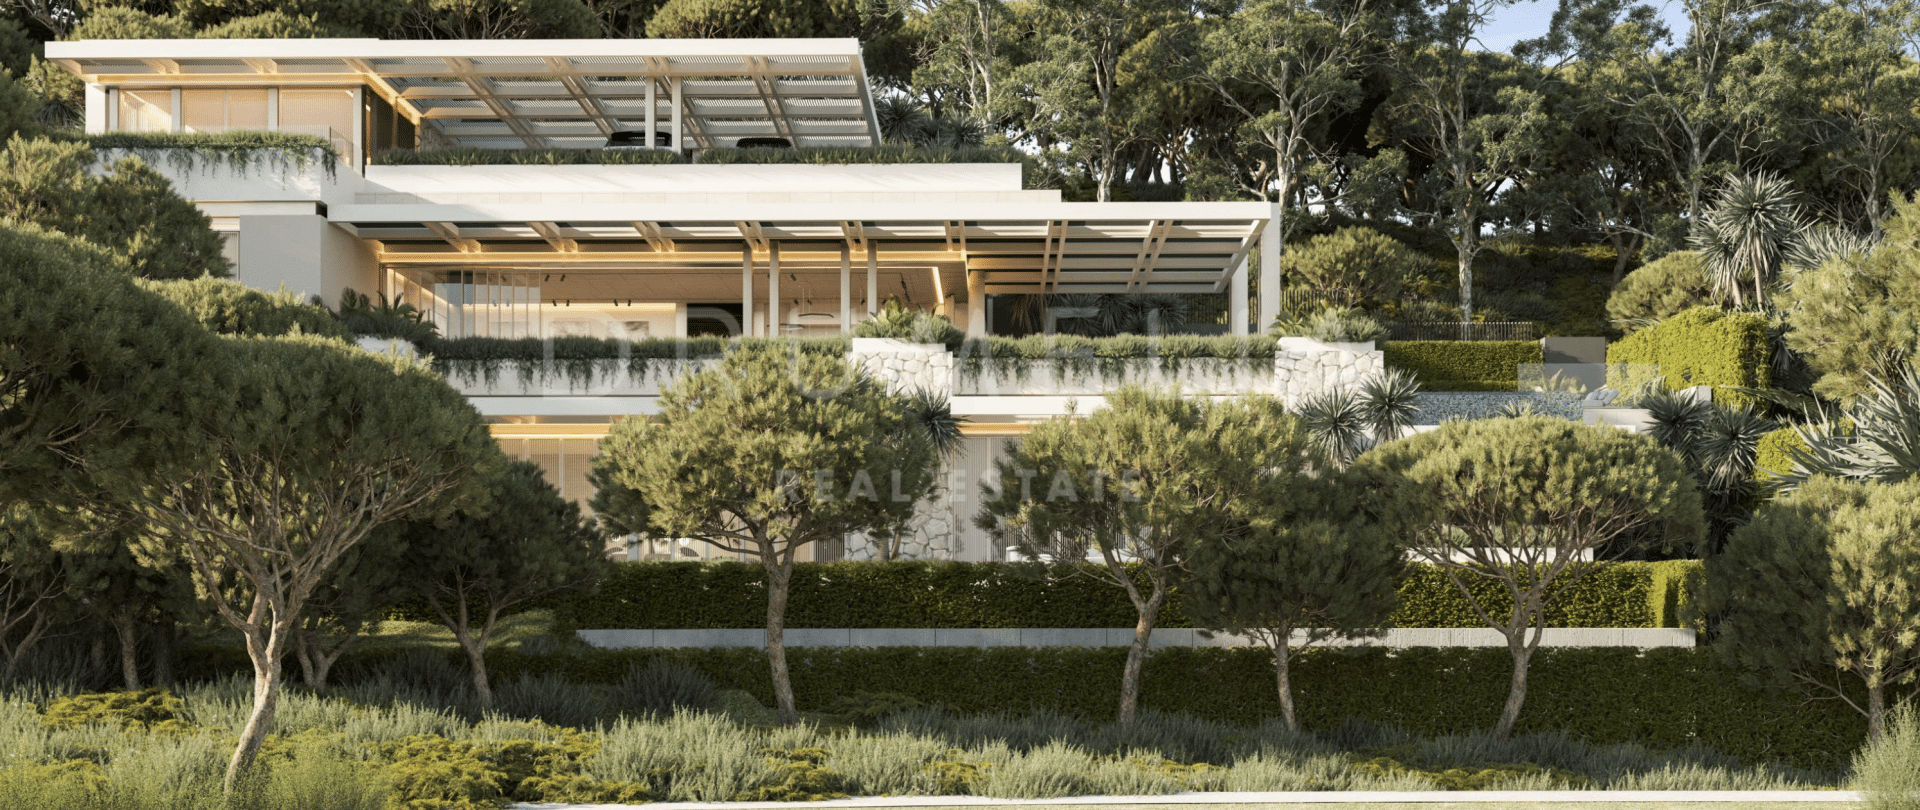 La Quinta 237 - Отличный участок с дизайнерским проектом и лицензией на строительство современного дома в La Reserva de La Quinta, Бенахавис